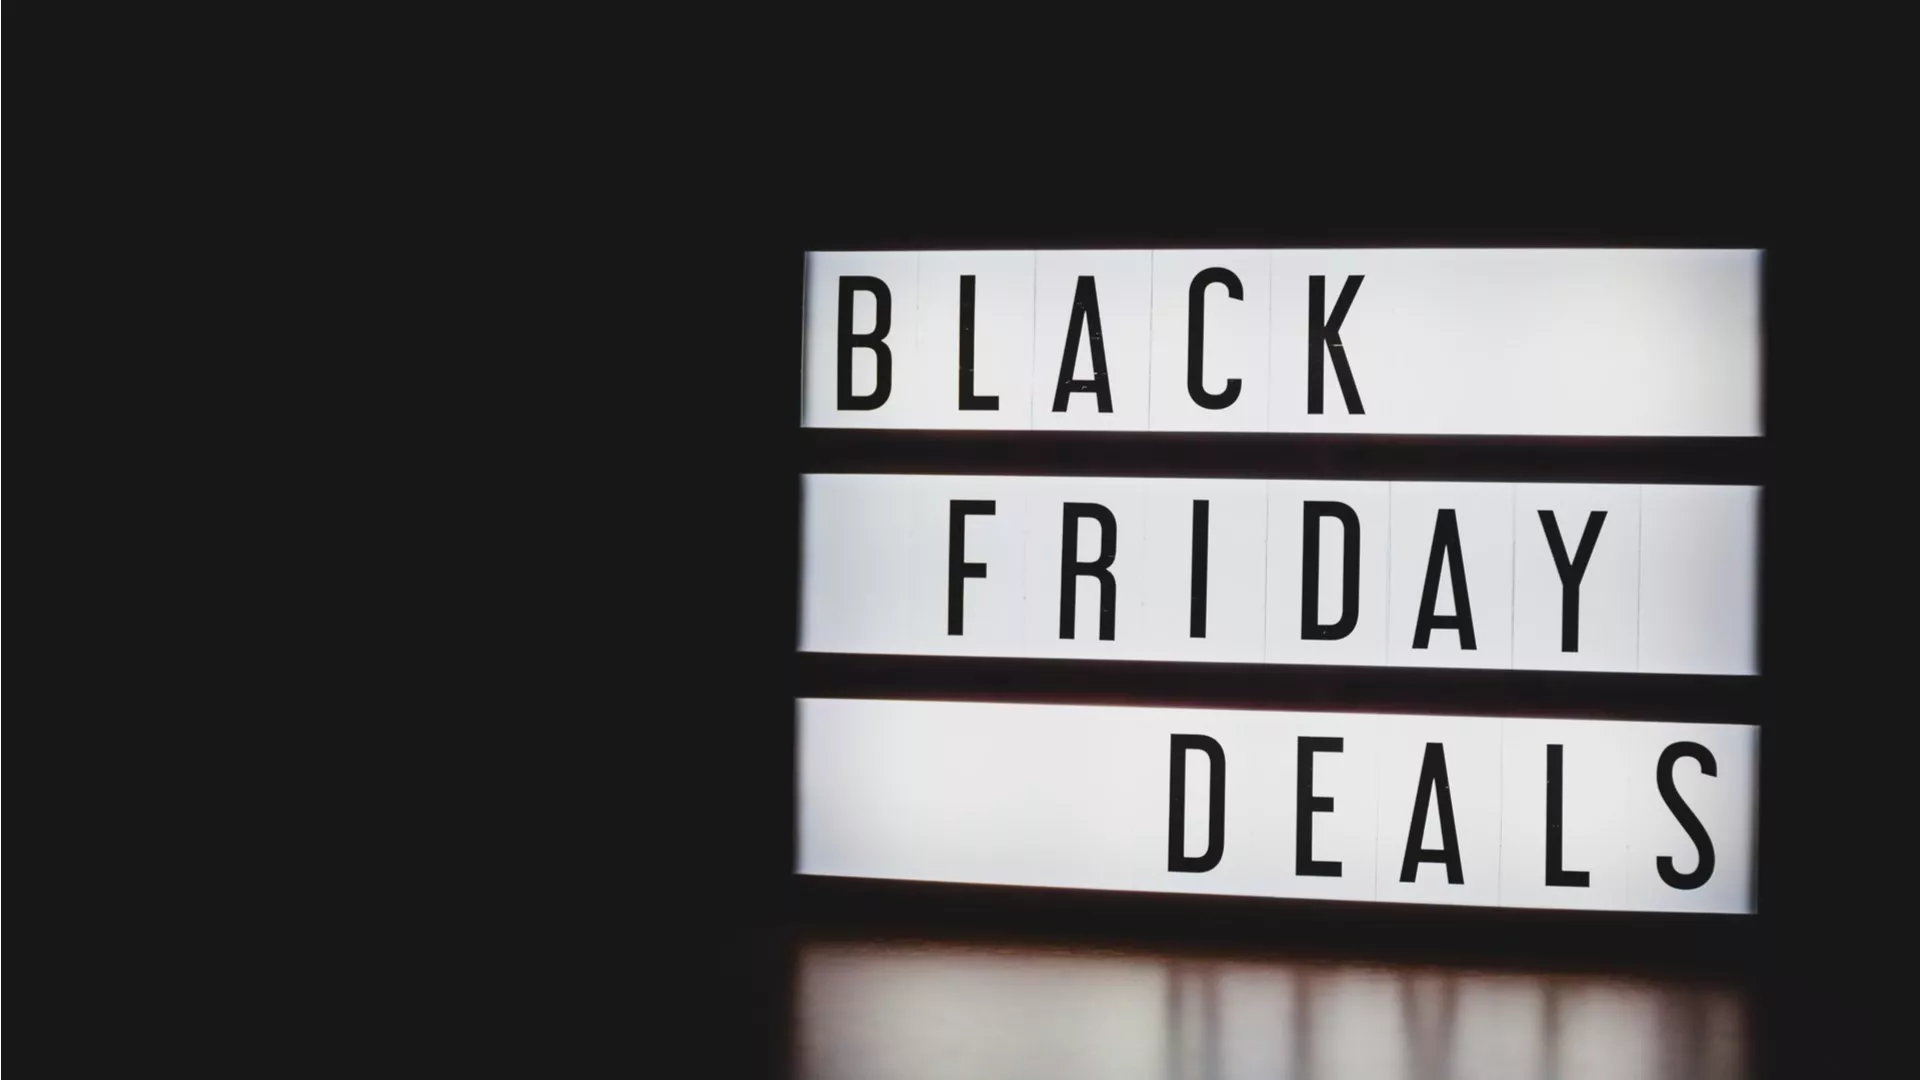 10 Best Black Friday Deals & Ads 2018 For Gadget Lovers - What Ia The Best Black Friday Deal